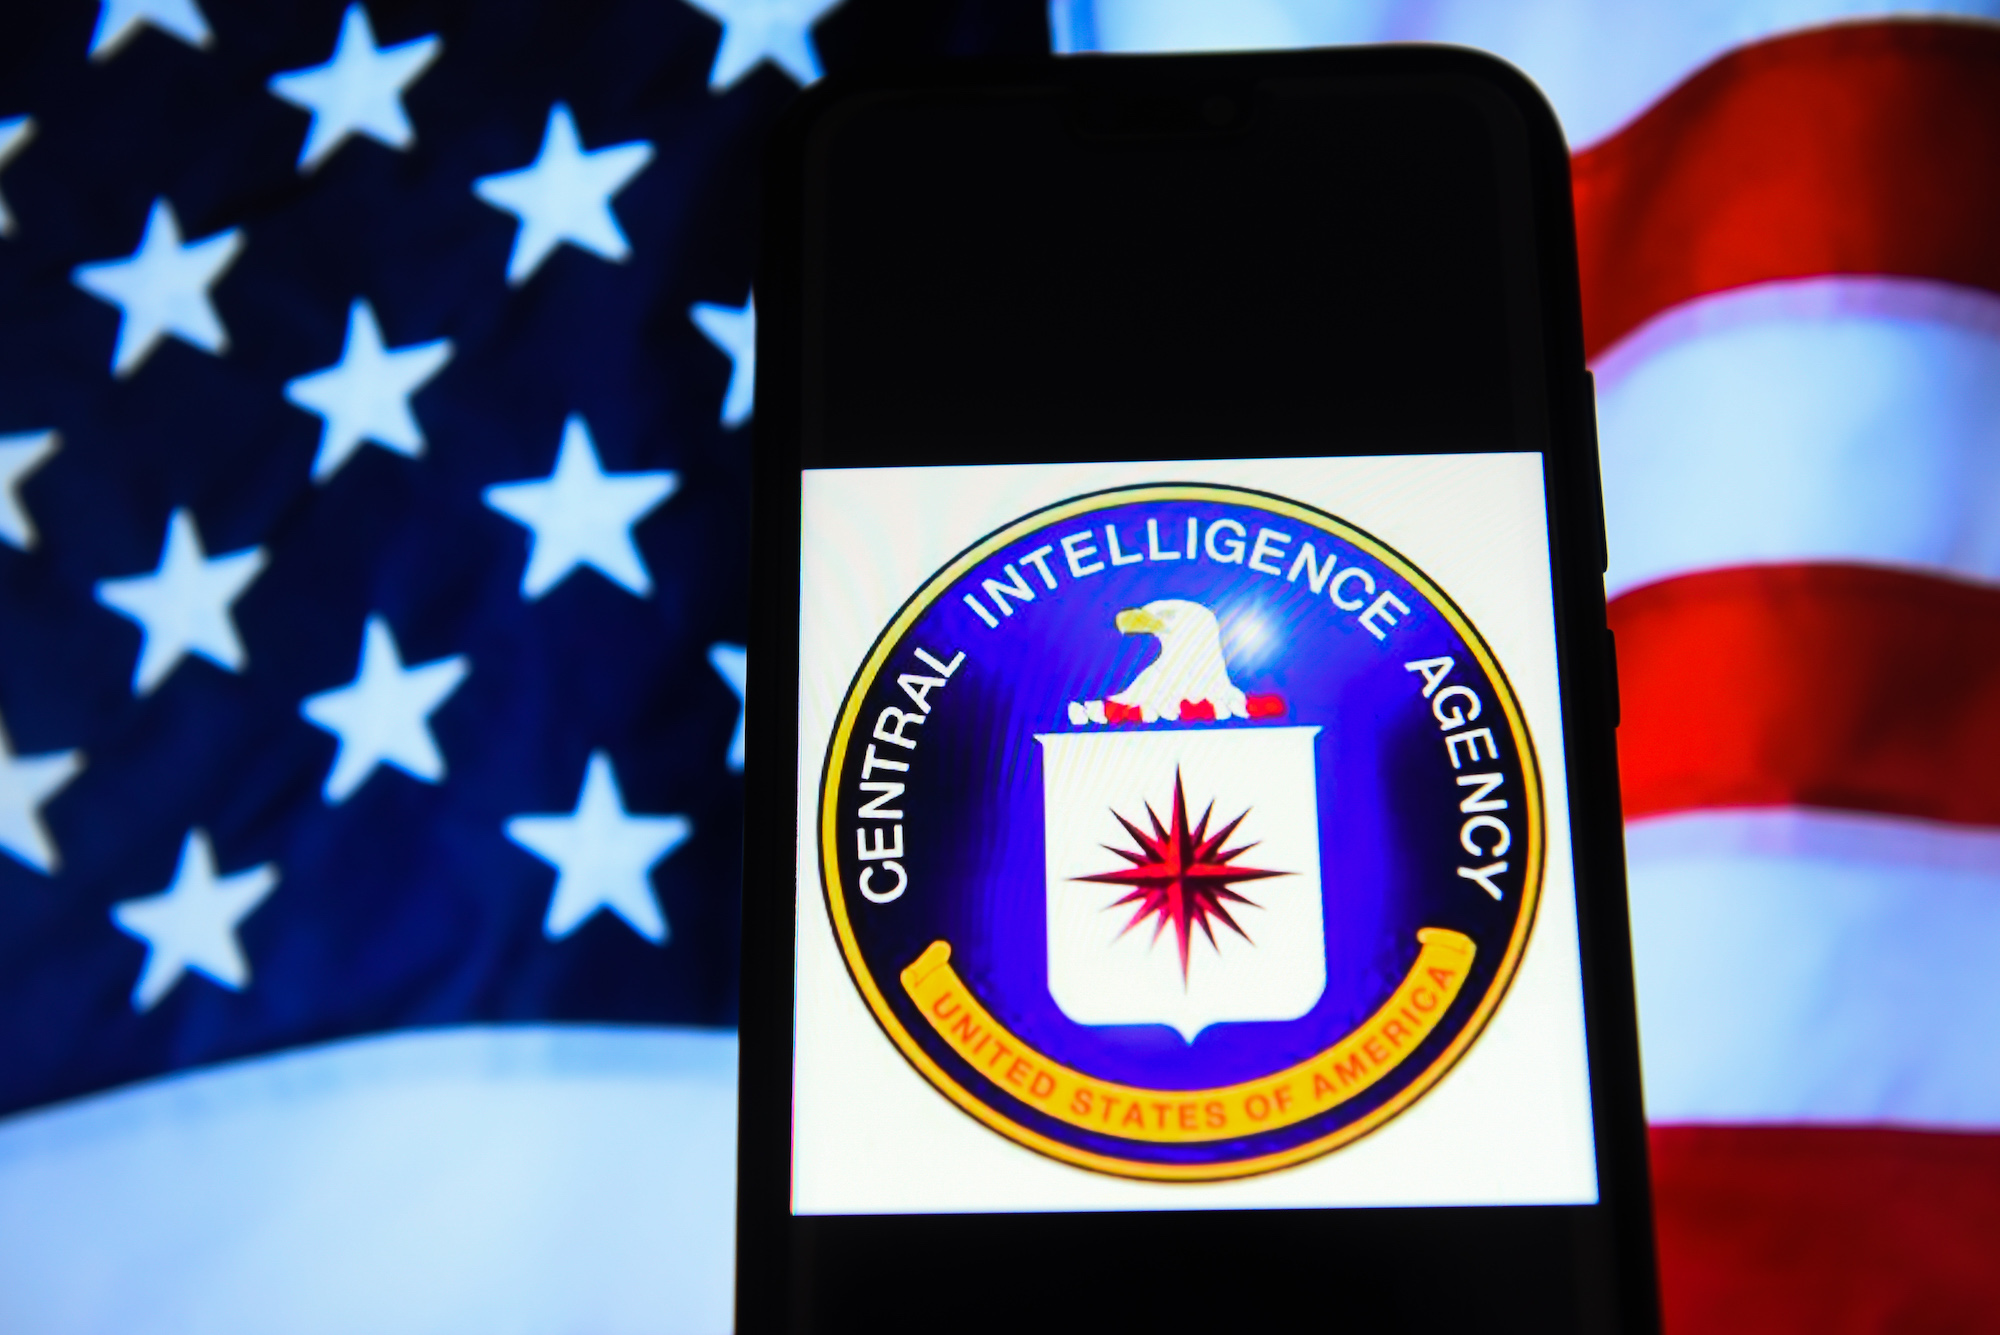 Central Intelligence Agency (CIA) logo